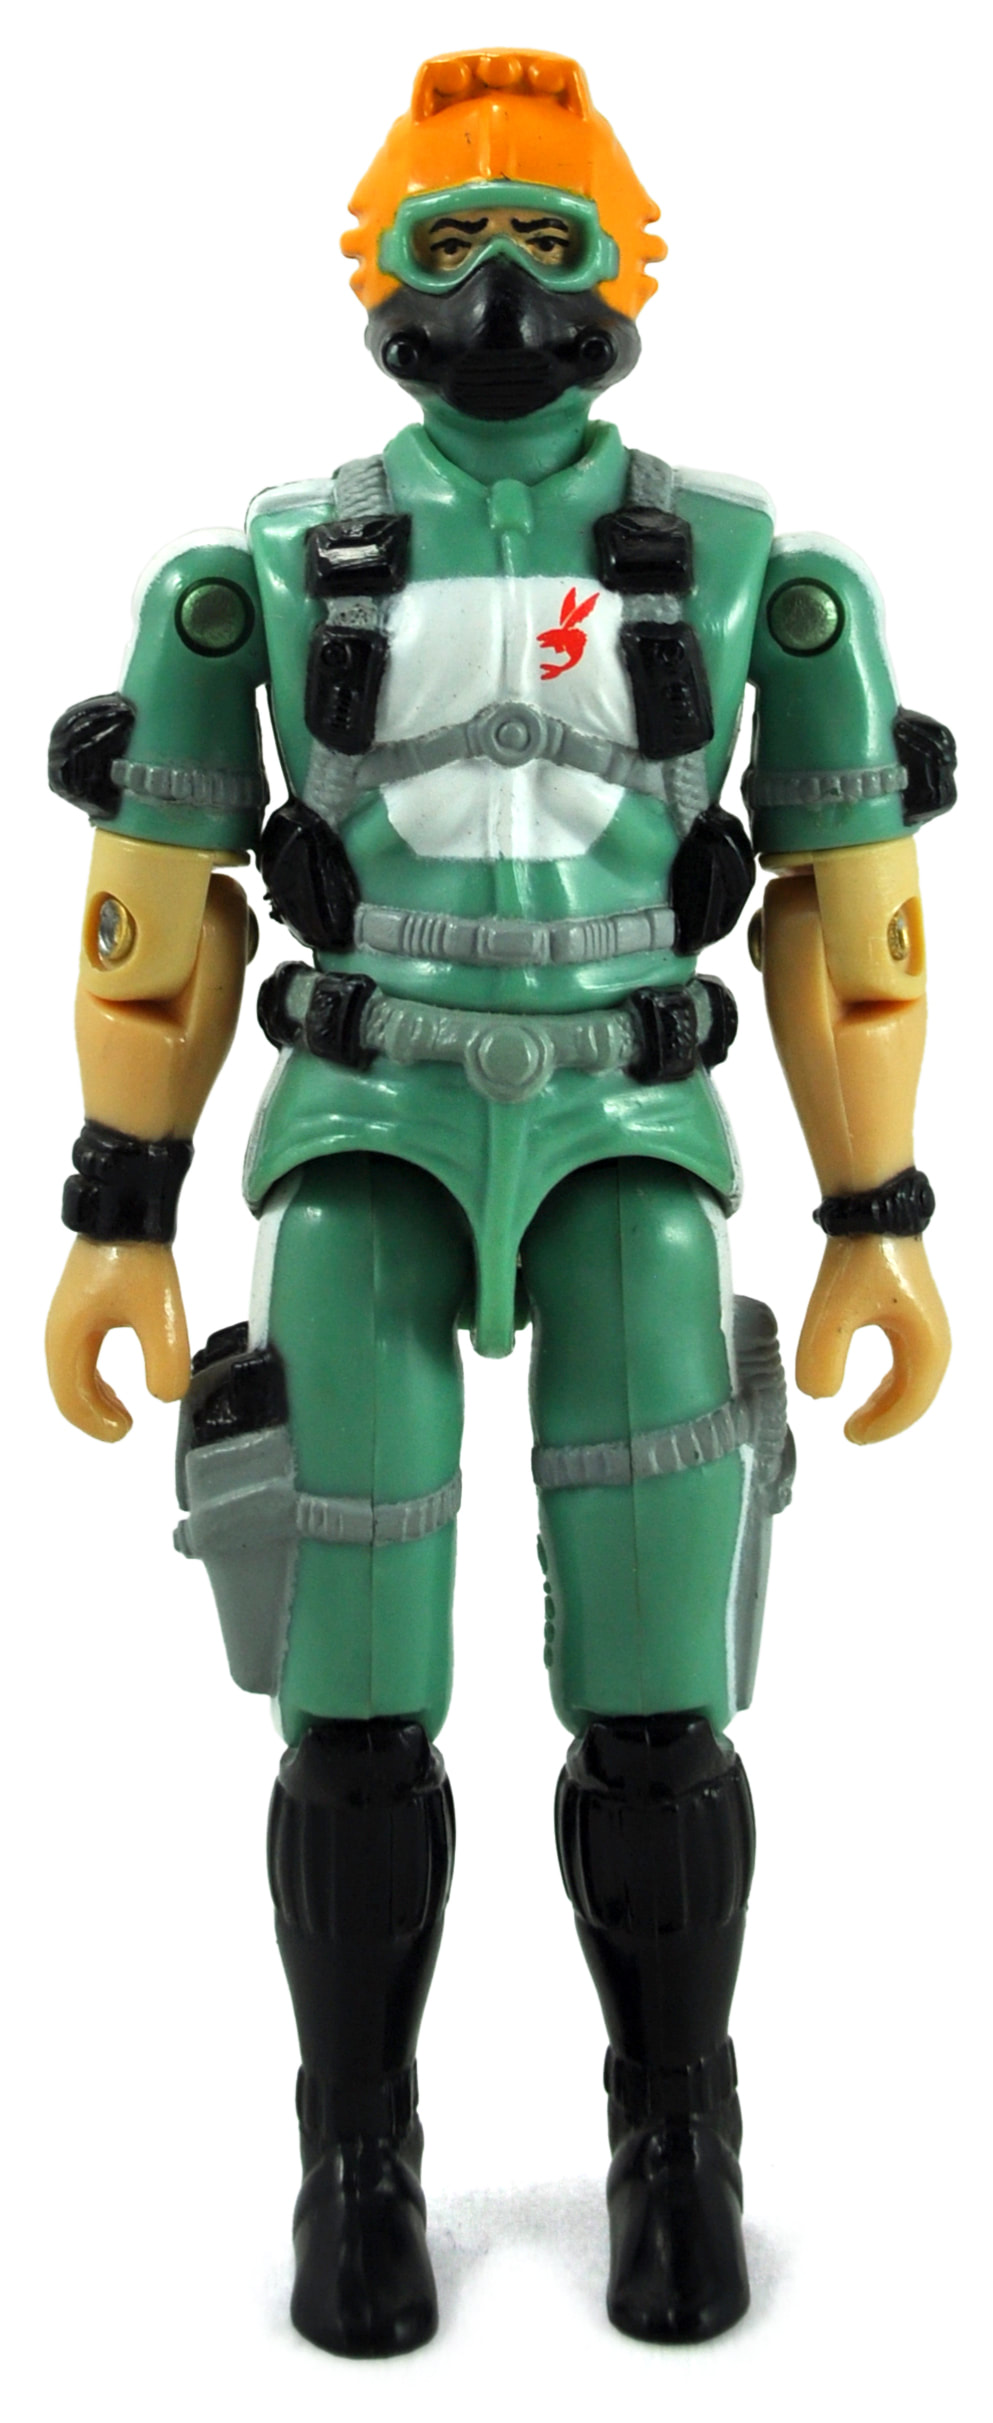 1986 Gi joe action force figures Hawk Sci Fi Wet-Suit Cross-Country Thrasher 